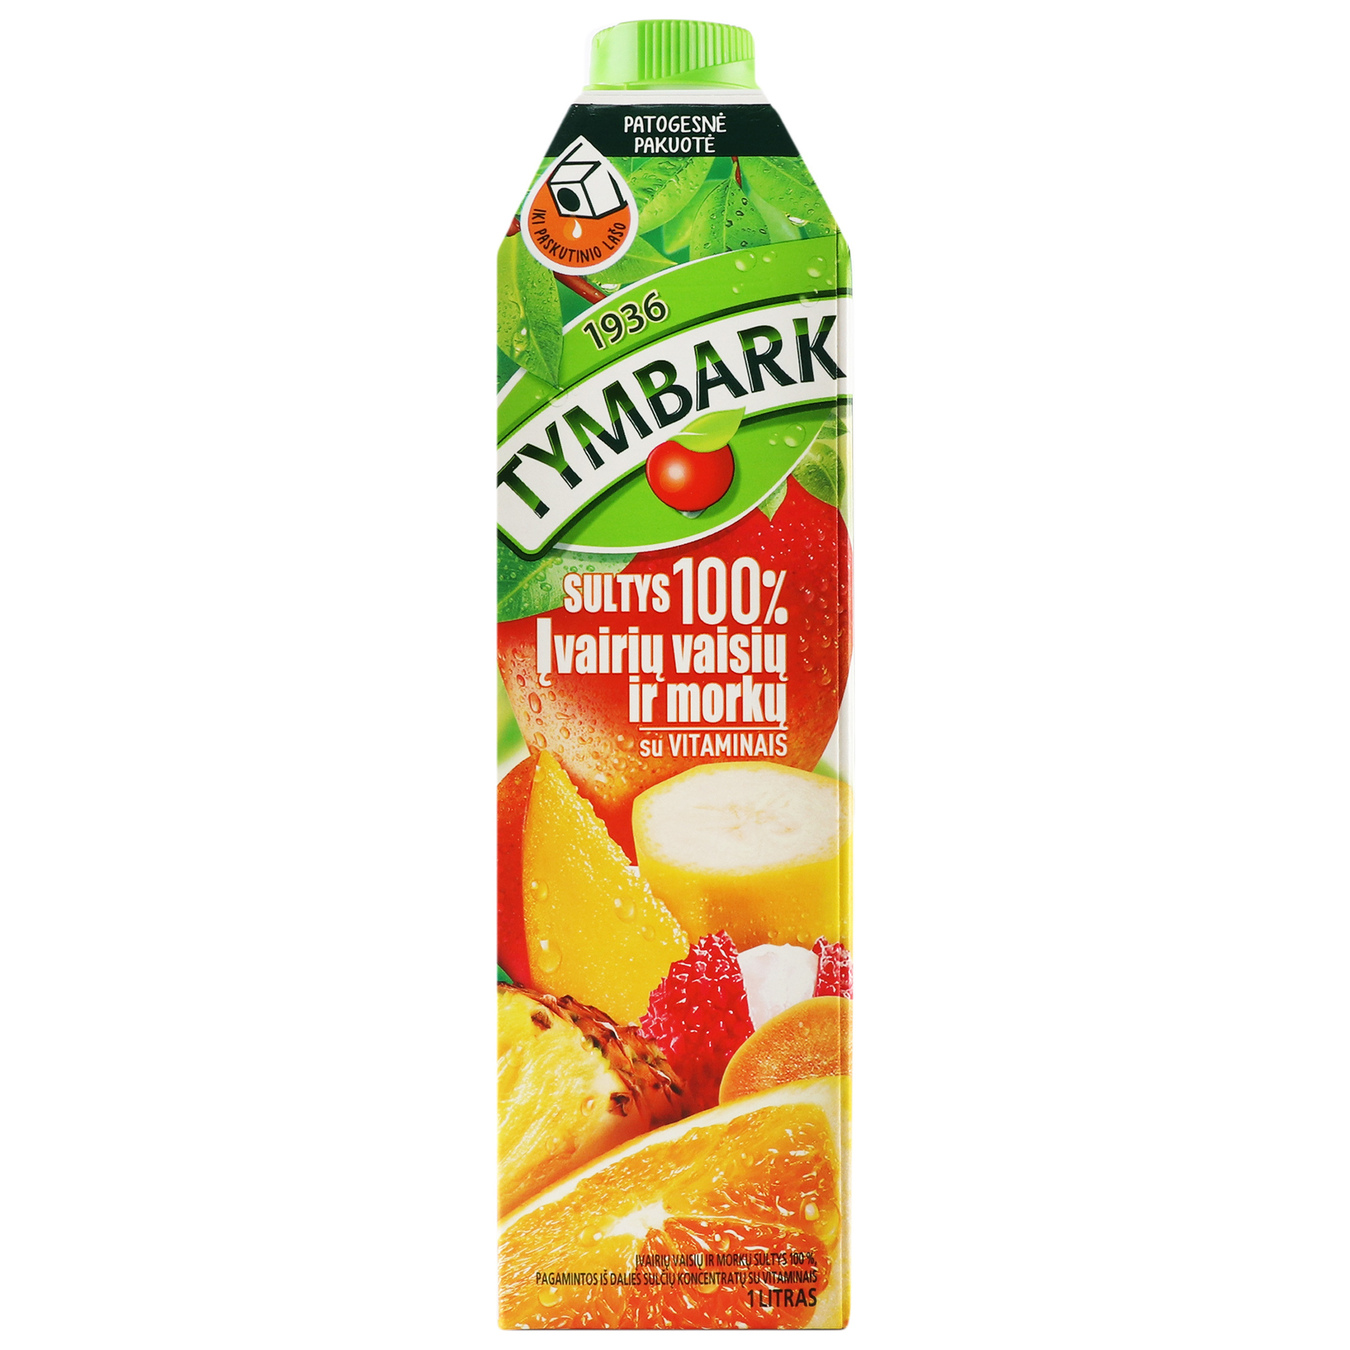 Tymbark multifruit carrot juice 1liter